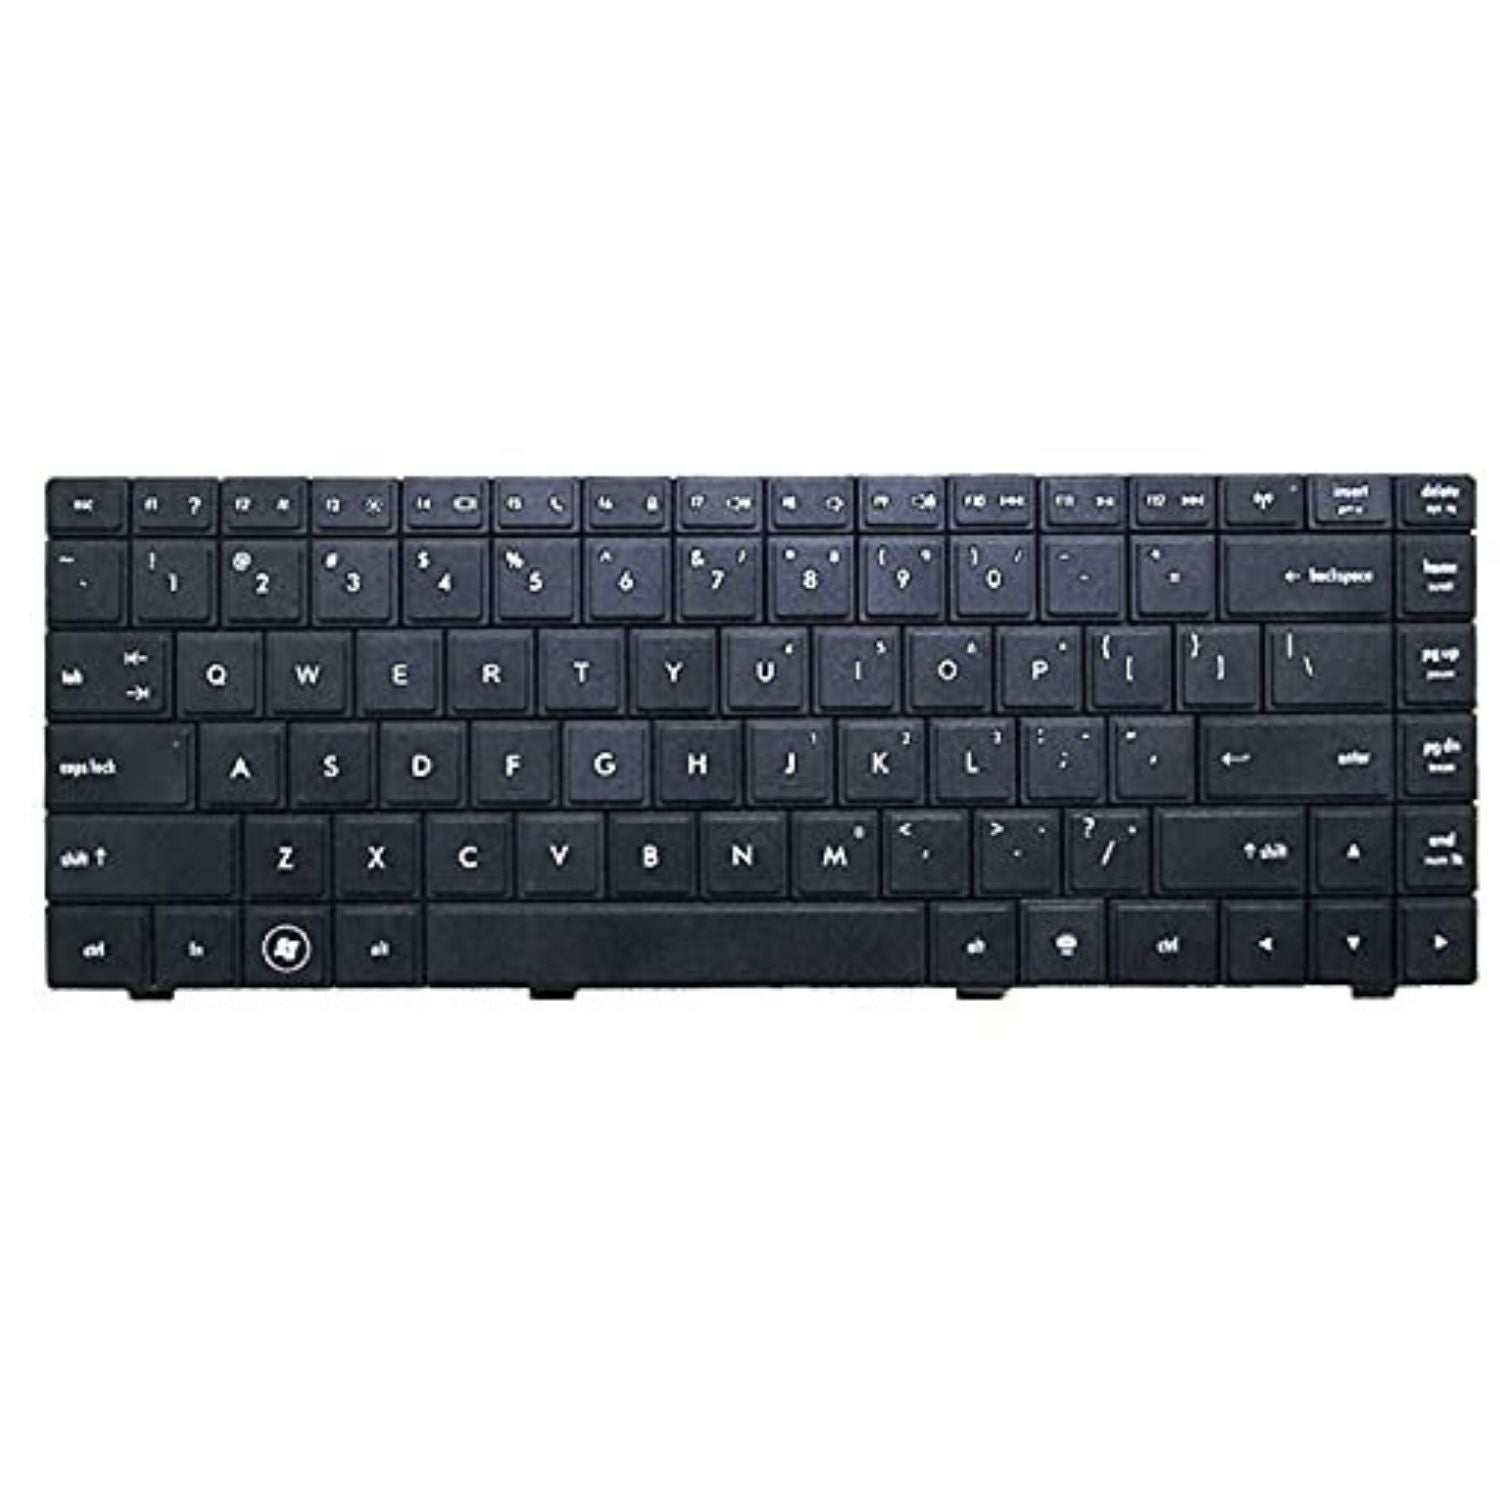 HP 606128-001 Laptop keyboard Copatible For Compaq 320 321 325 420 425 CQ321 CQ325 CQ326 CQ420 CQ421 CQ425 HP Pavilion 17-E000 17-E100 17-N000 17E-110DX 17z-e000 605813-001 Series Laptops.